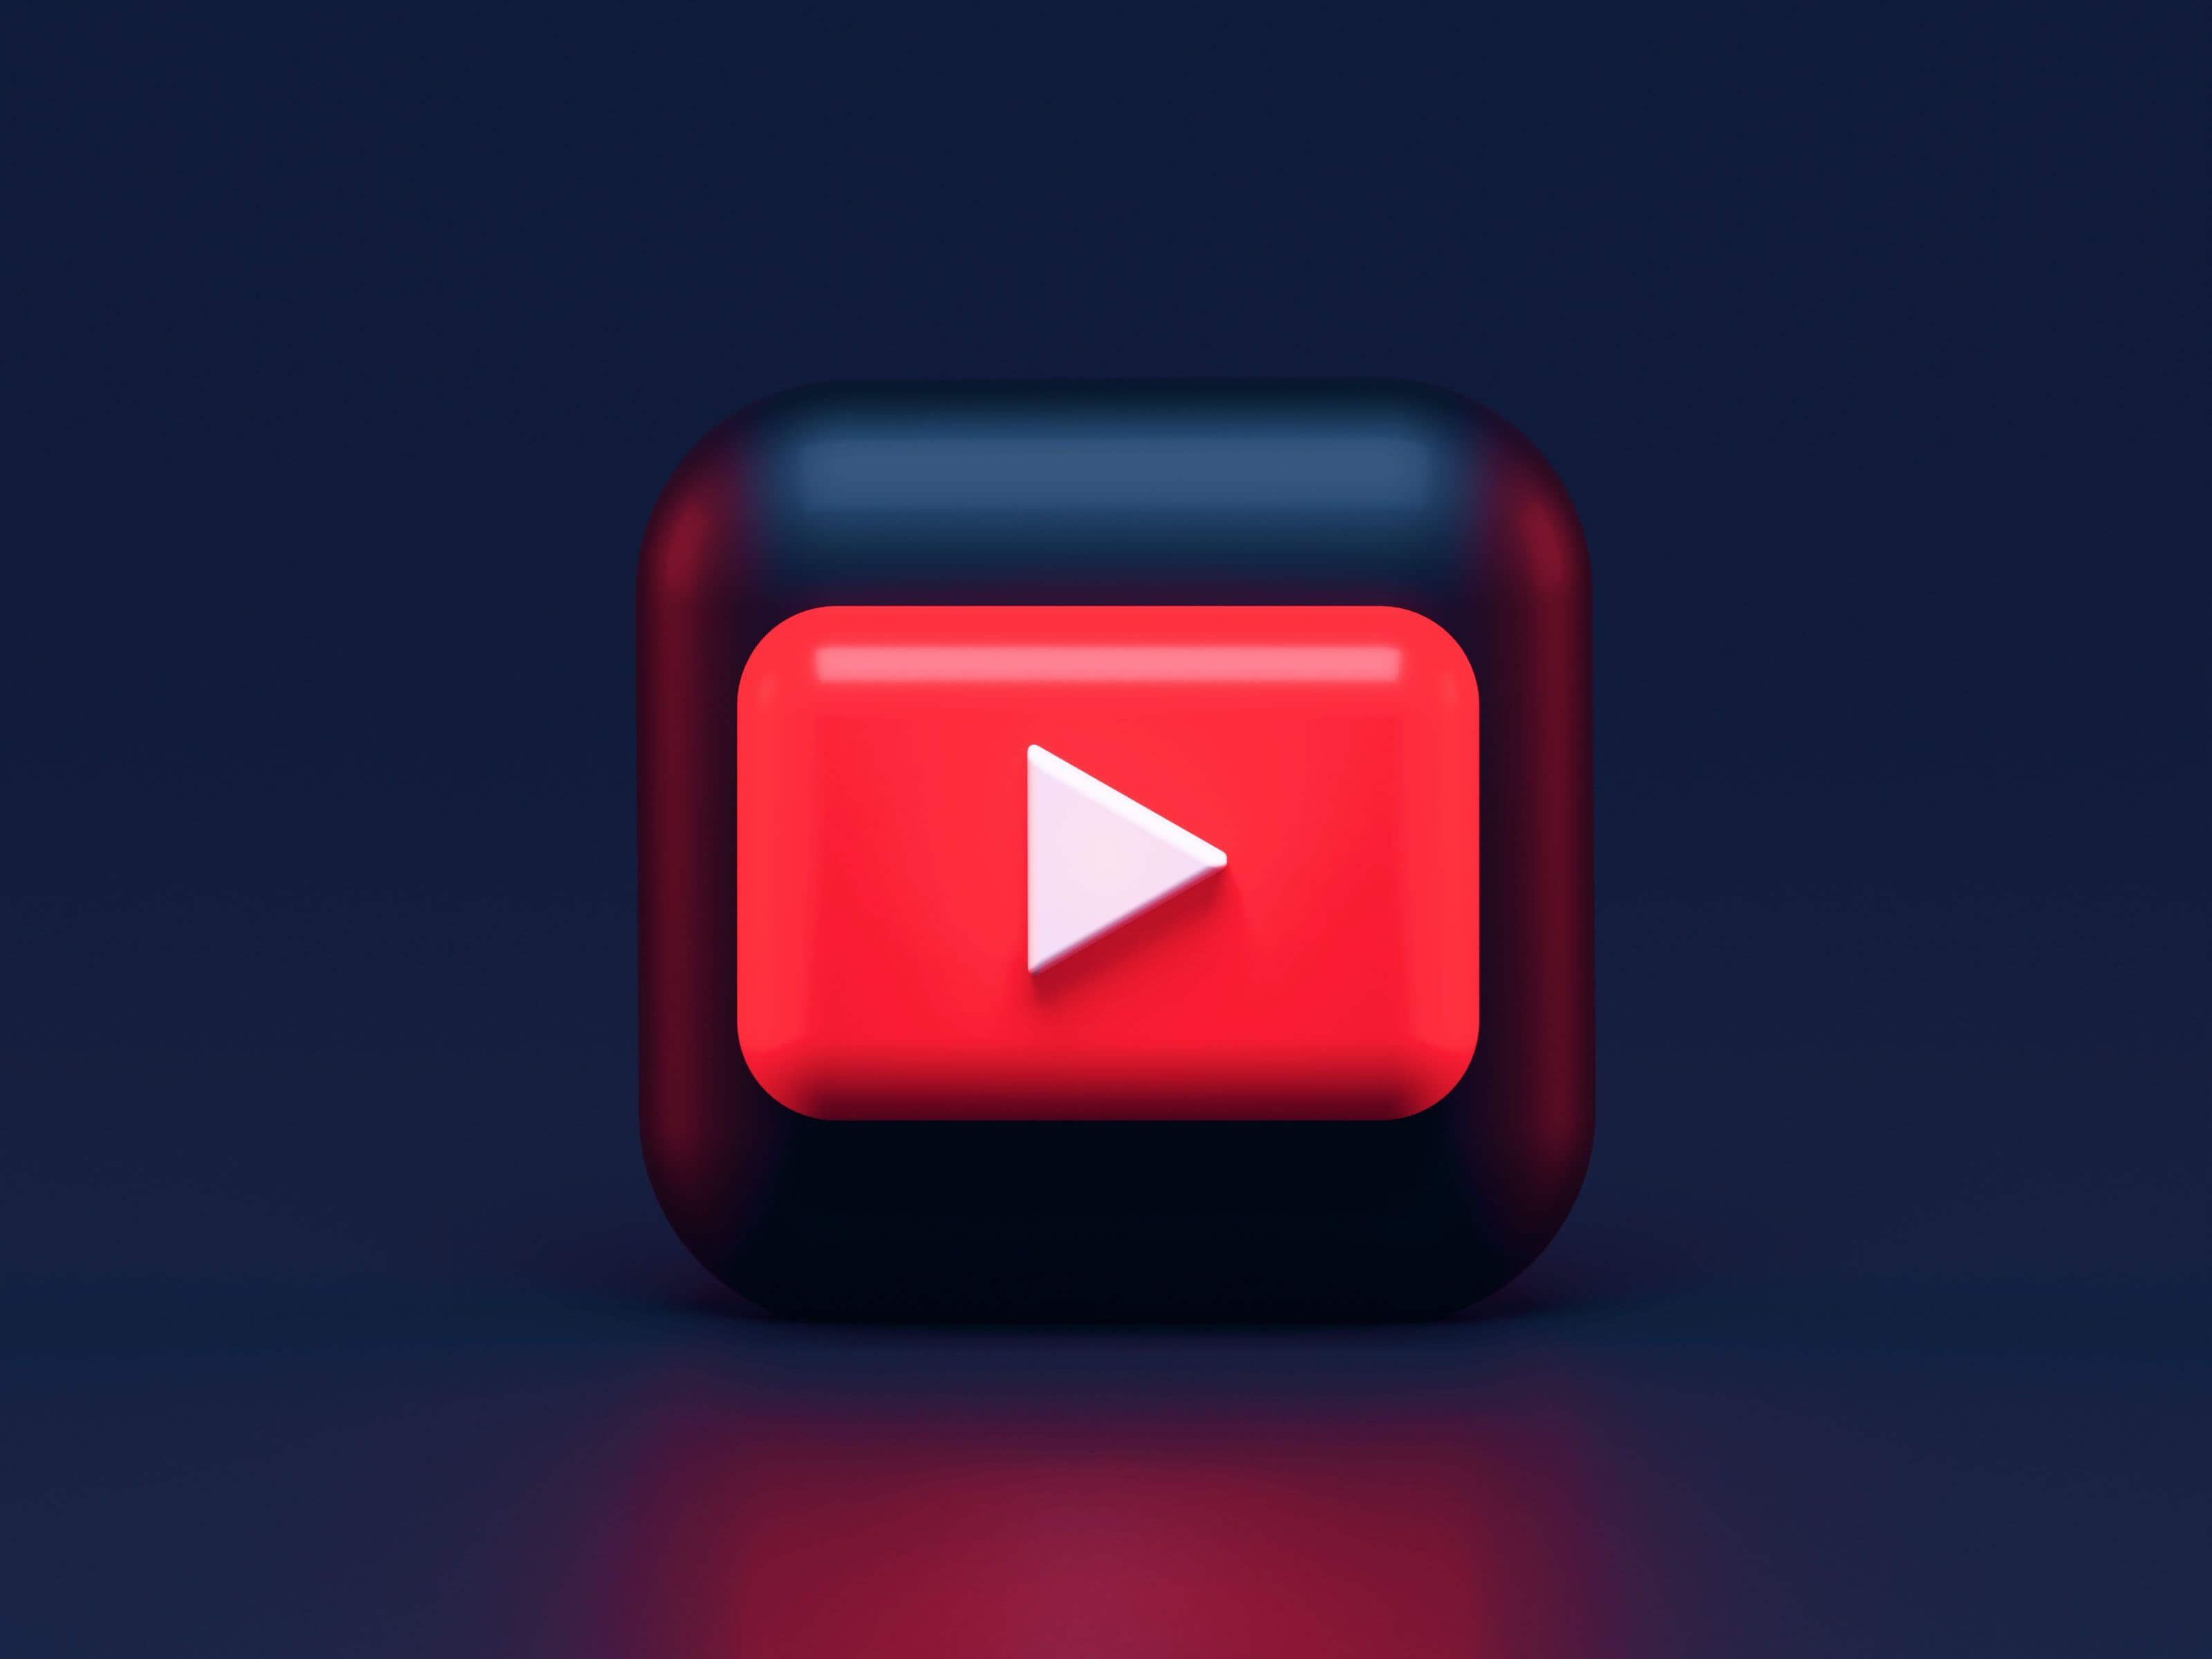 Trucos o Lifehacks para aprovechar al máximo la suscripción a YouTube Premium